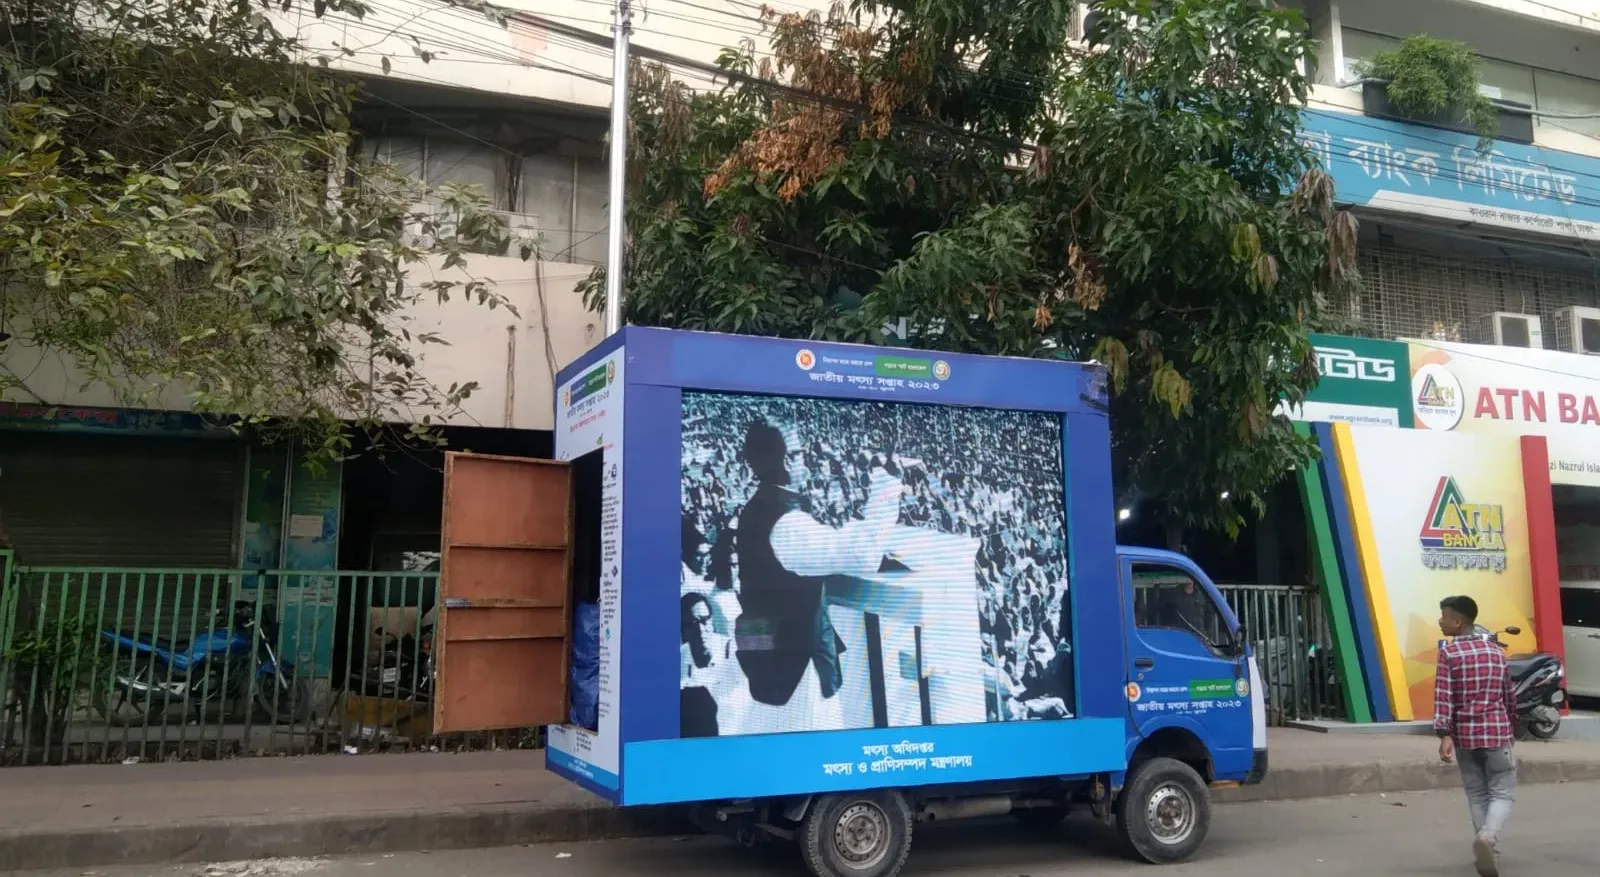 LED Caravan advertising in Bangladesh